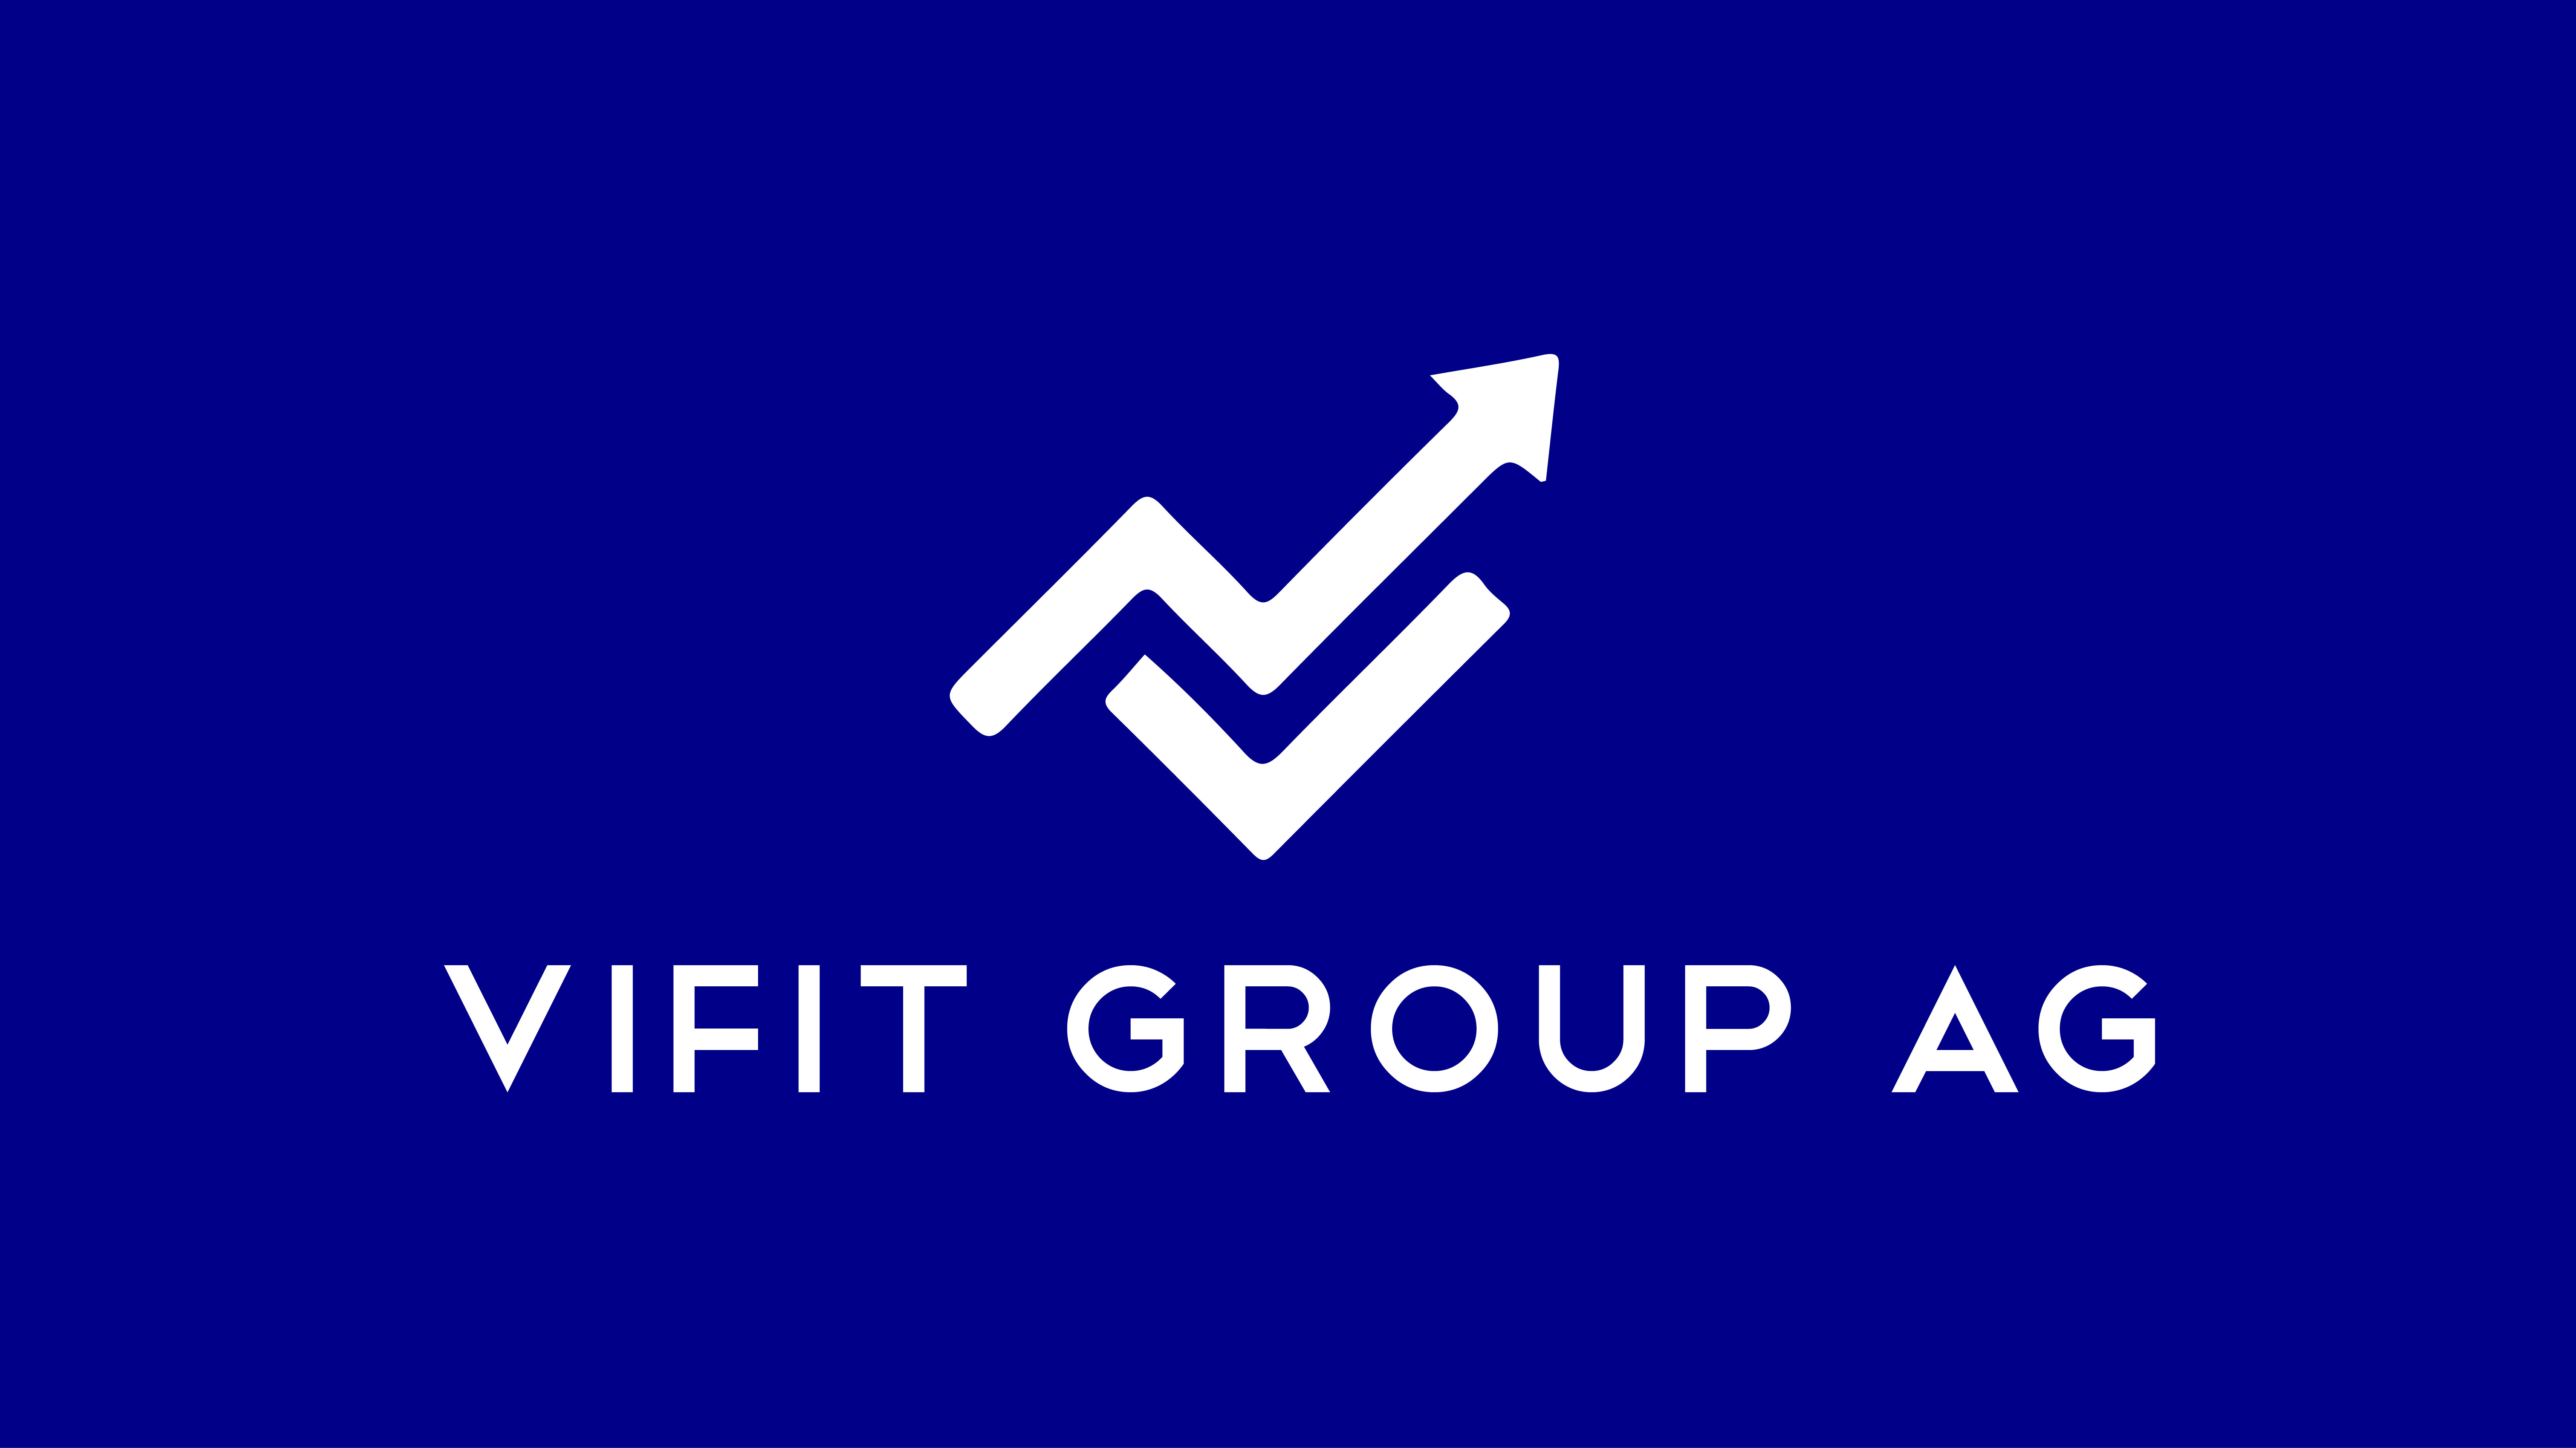 VIFIT Group AG